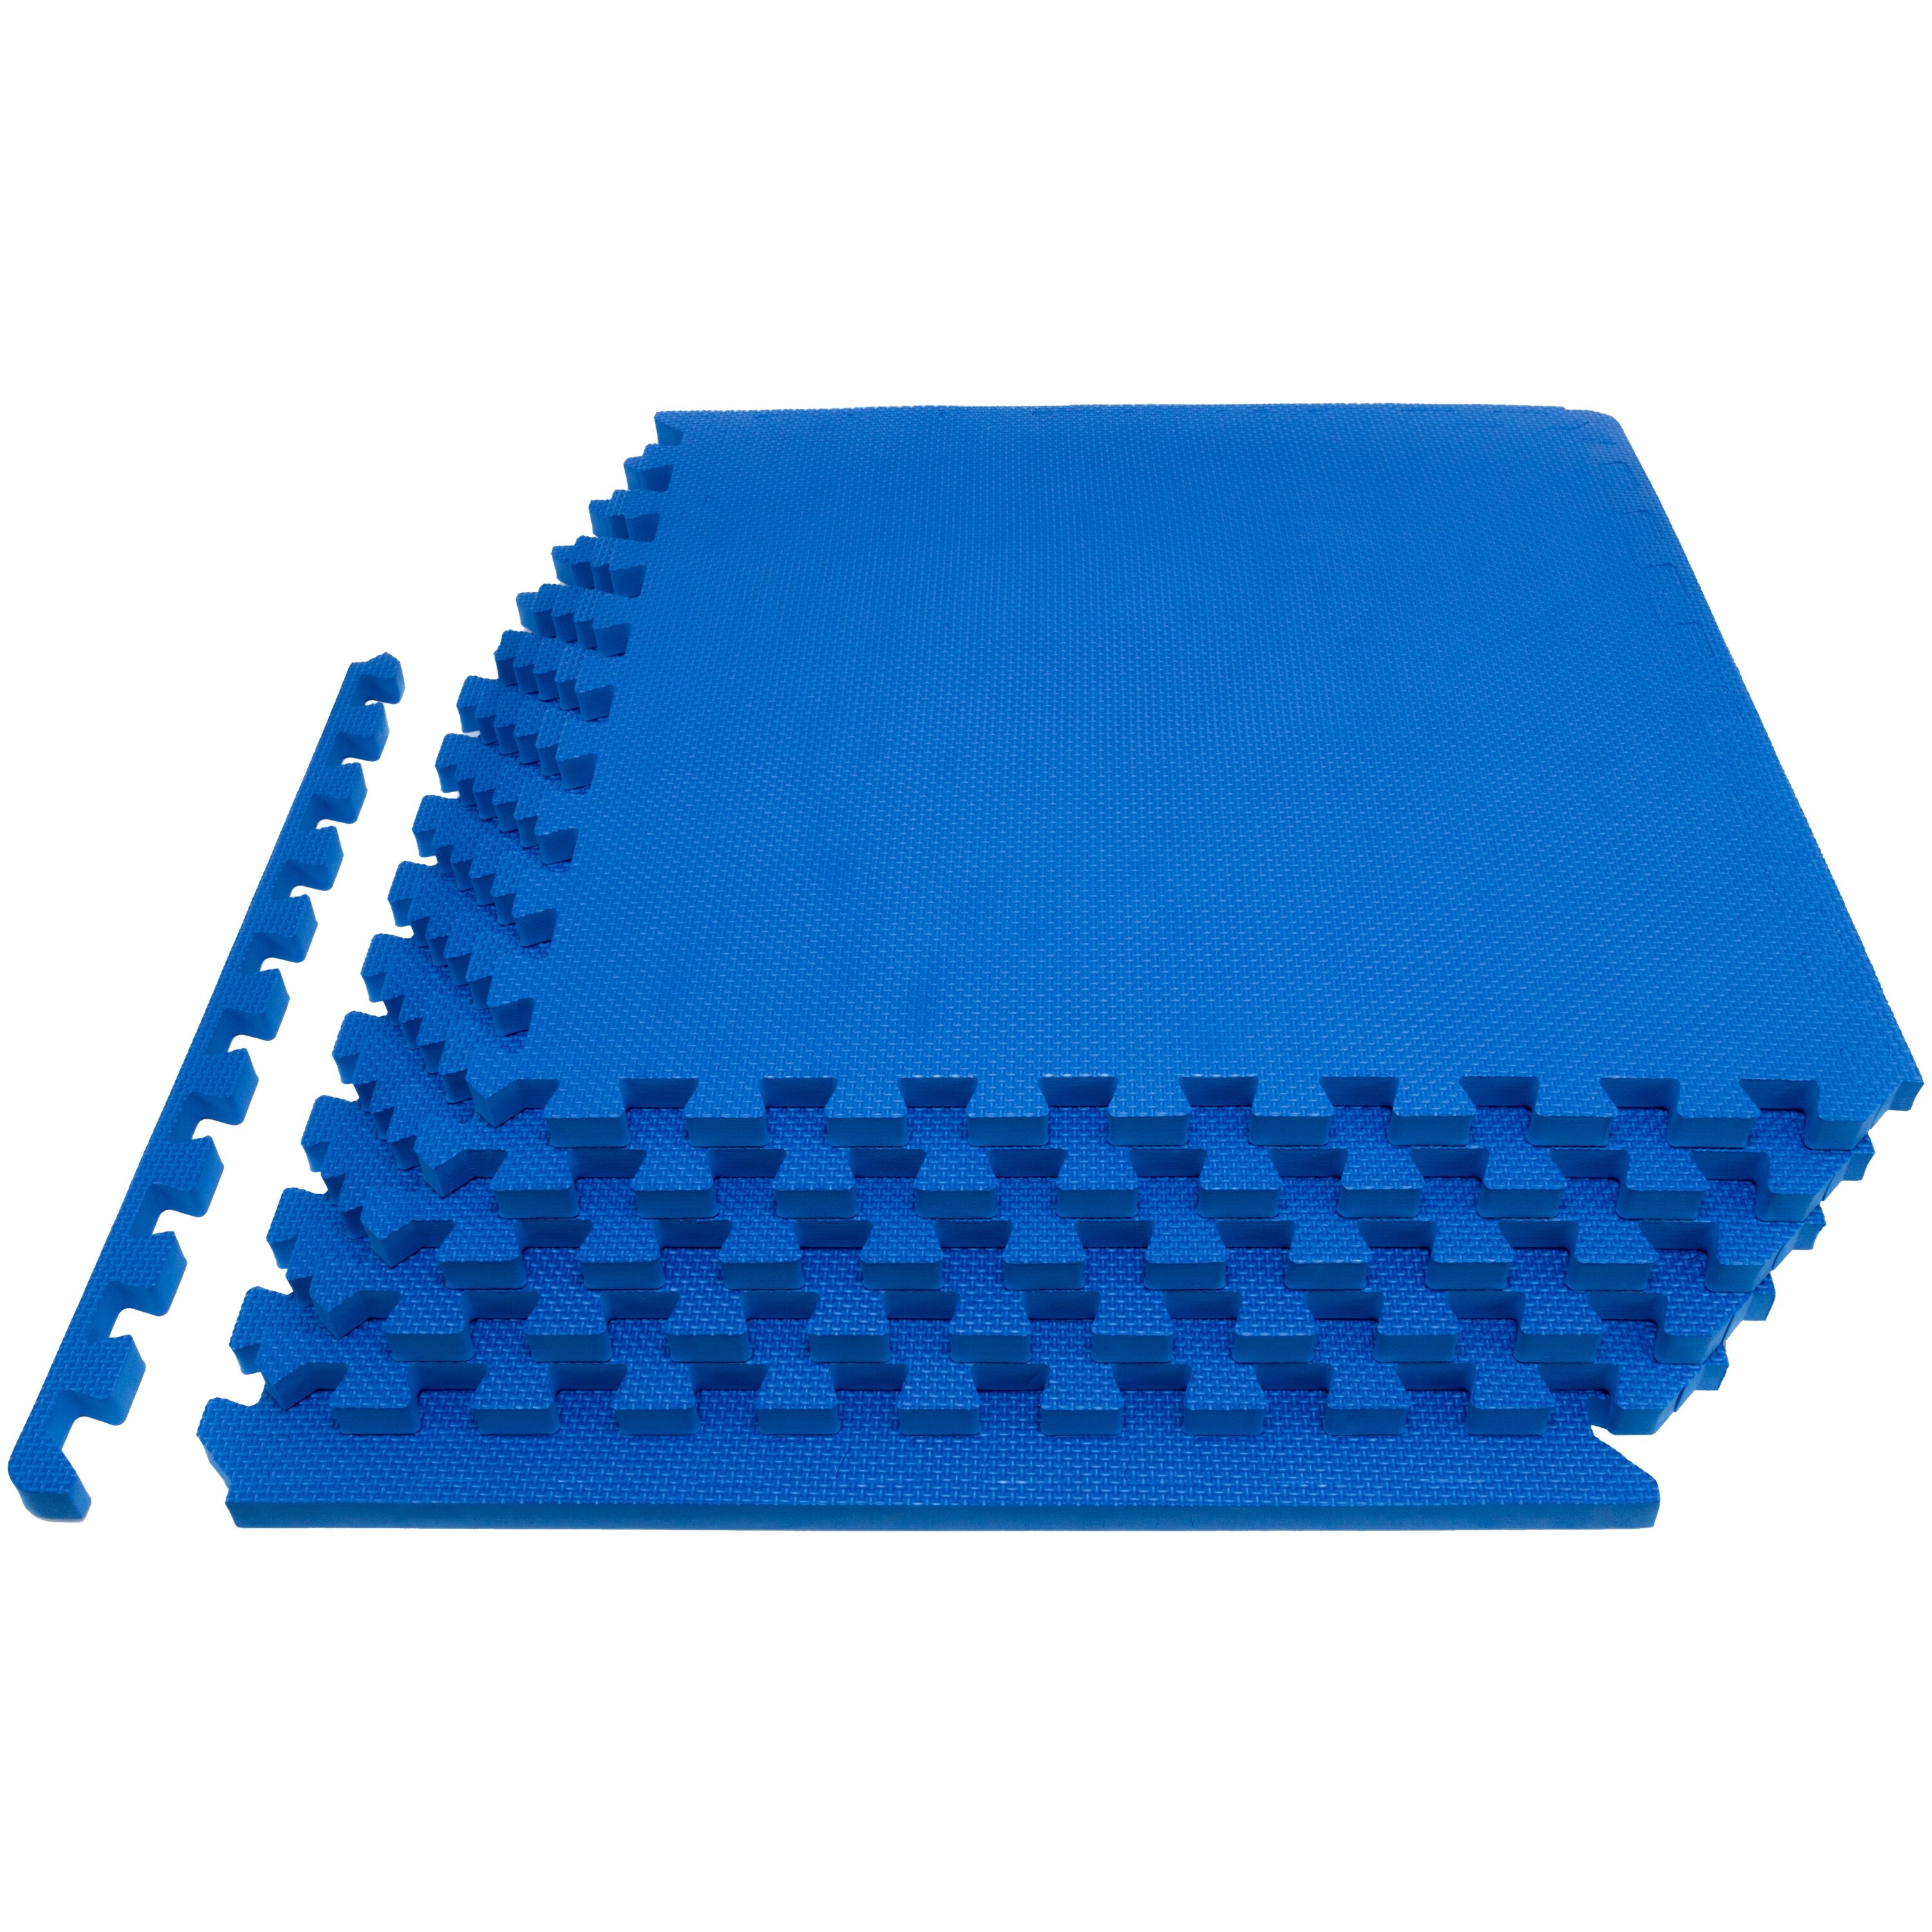 Marcy EVA Foam Interlocking Flooring Mat High Density Non-Slip Tiles for  Fitness Equipment, Workout Cushion and Floor Protection